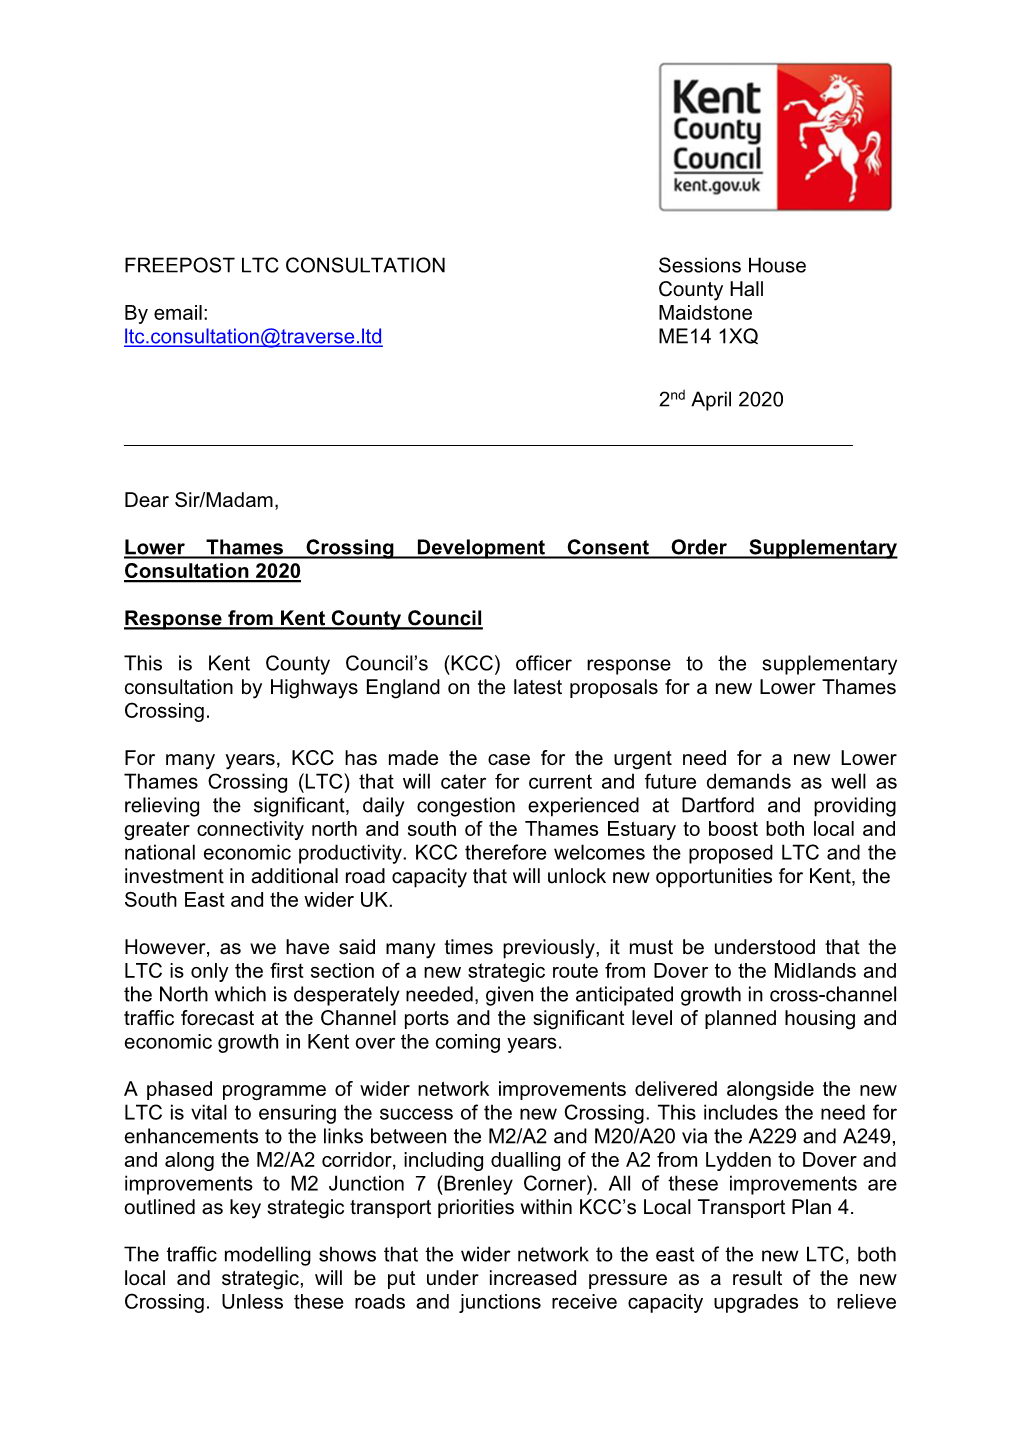 Lower Thames Crossing Development Consent Order Supplementary Consultation 2020